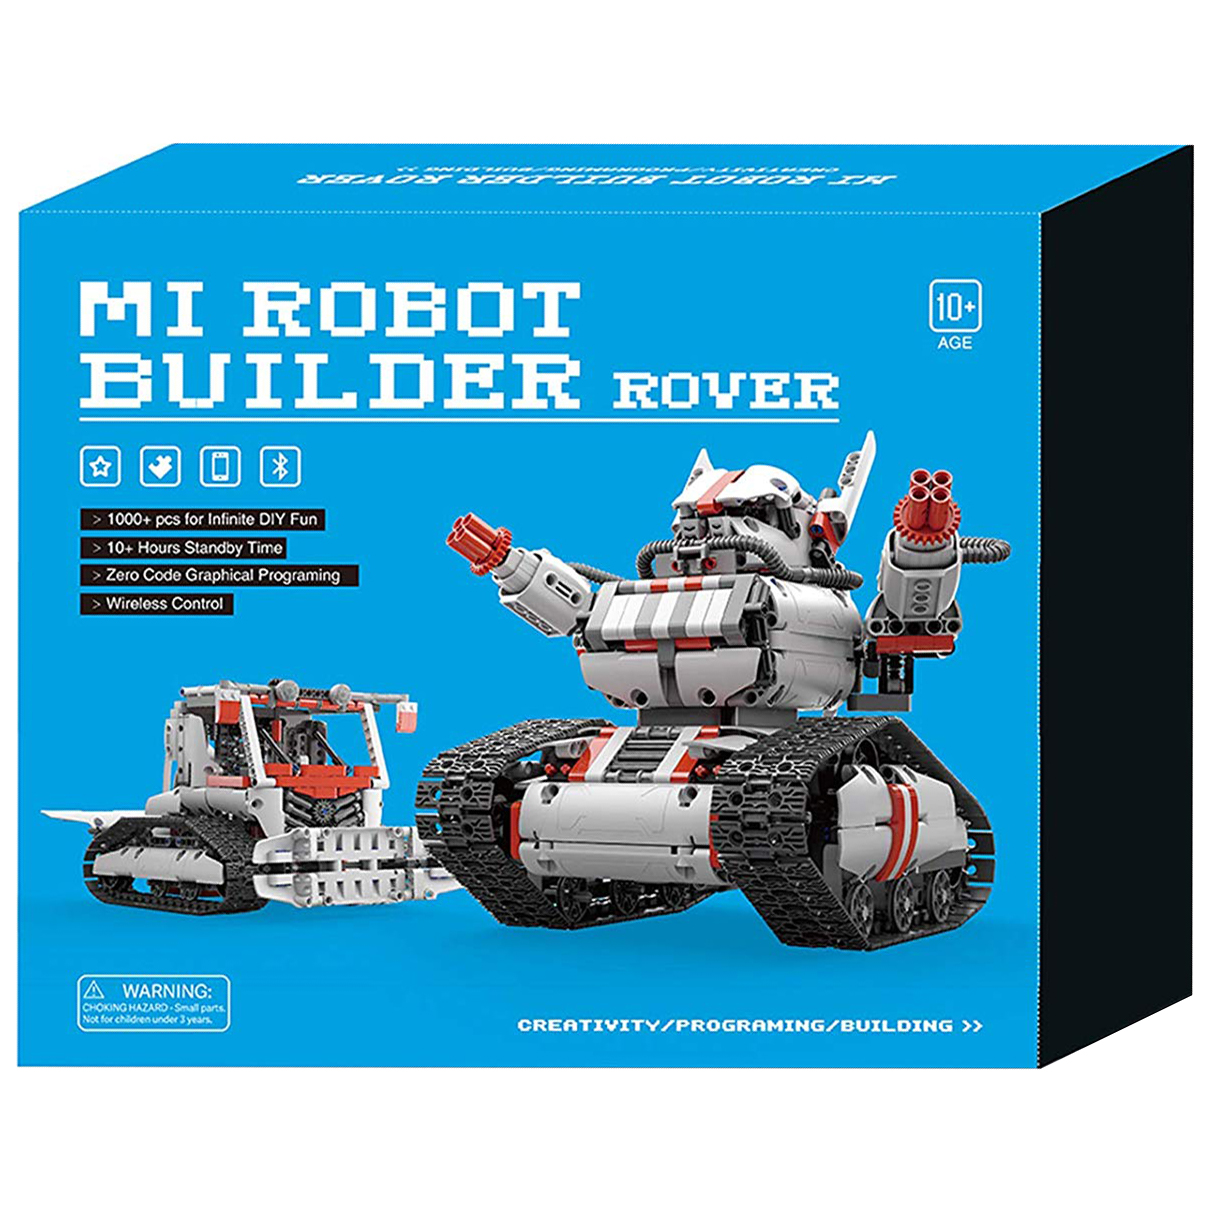 بسته رباتیک مدل Mi Robot Builder Rover